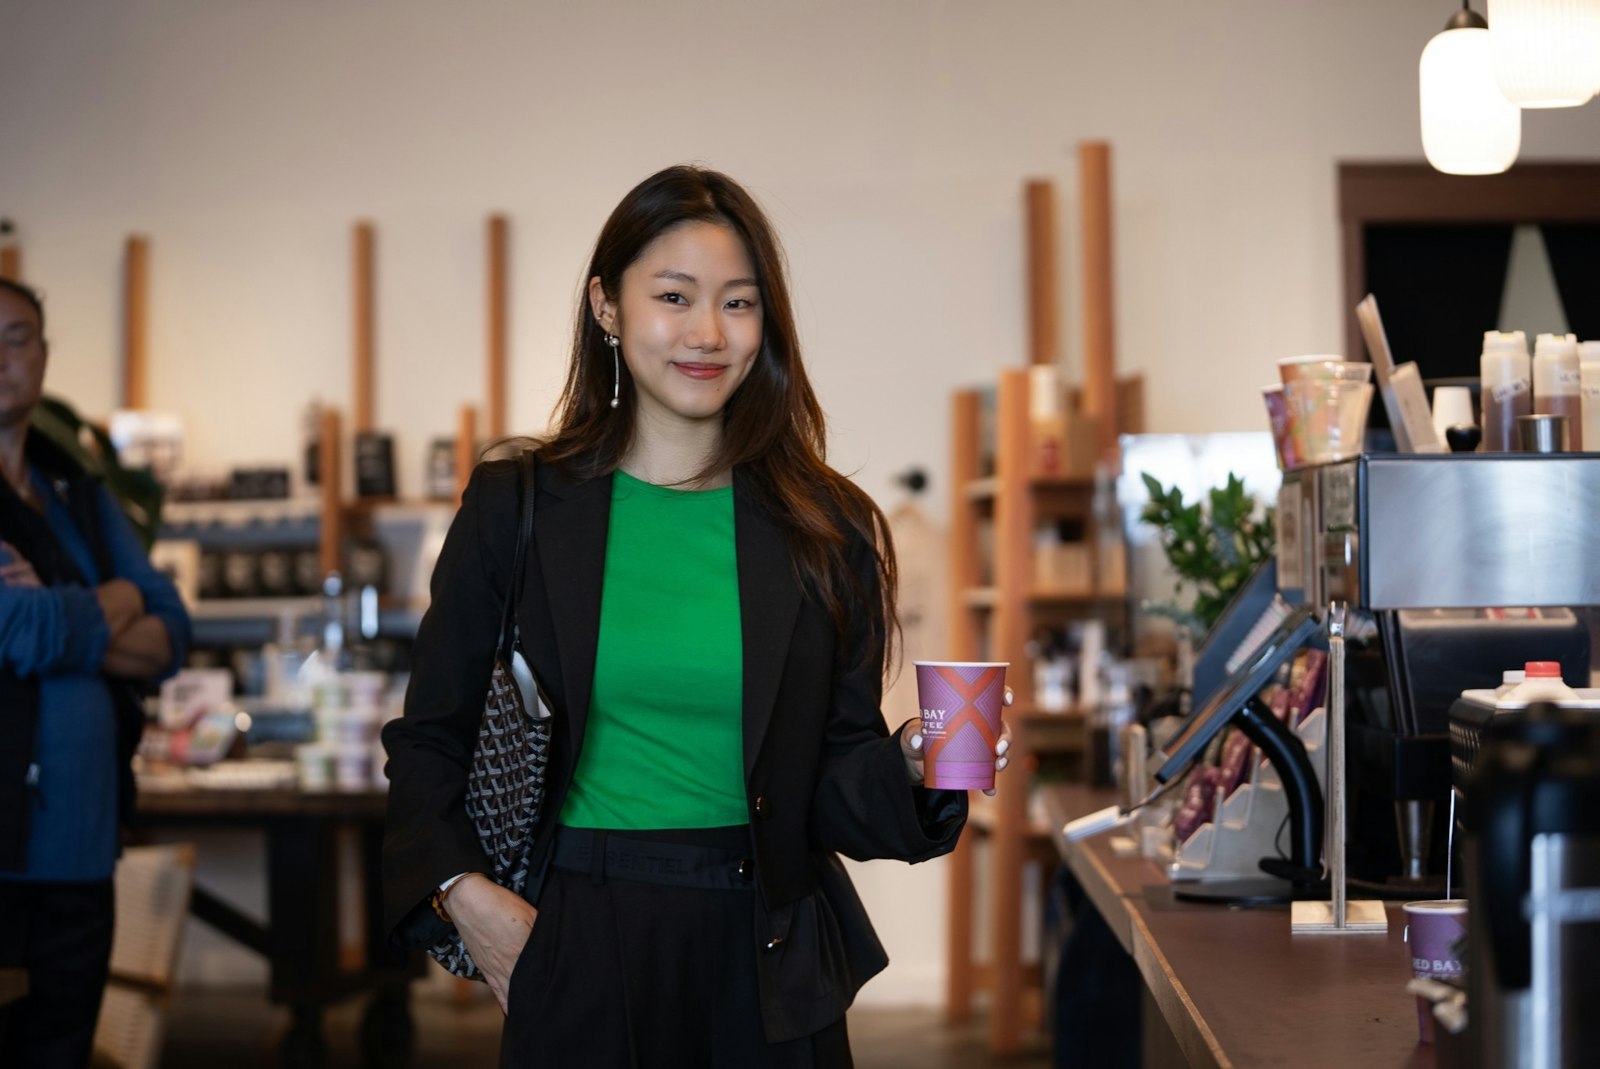 Zoox employee Genie grabbing coffee at a local coffee shop